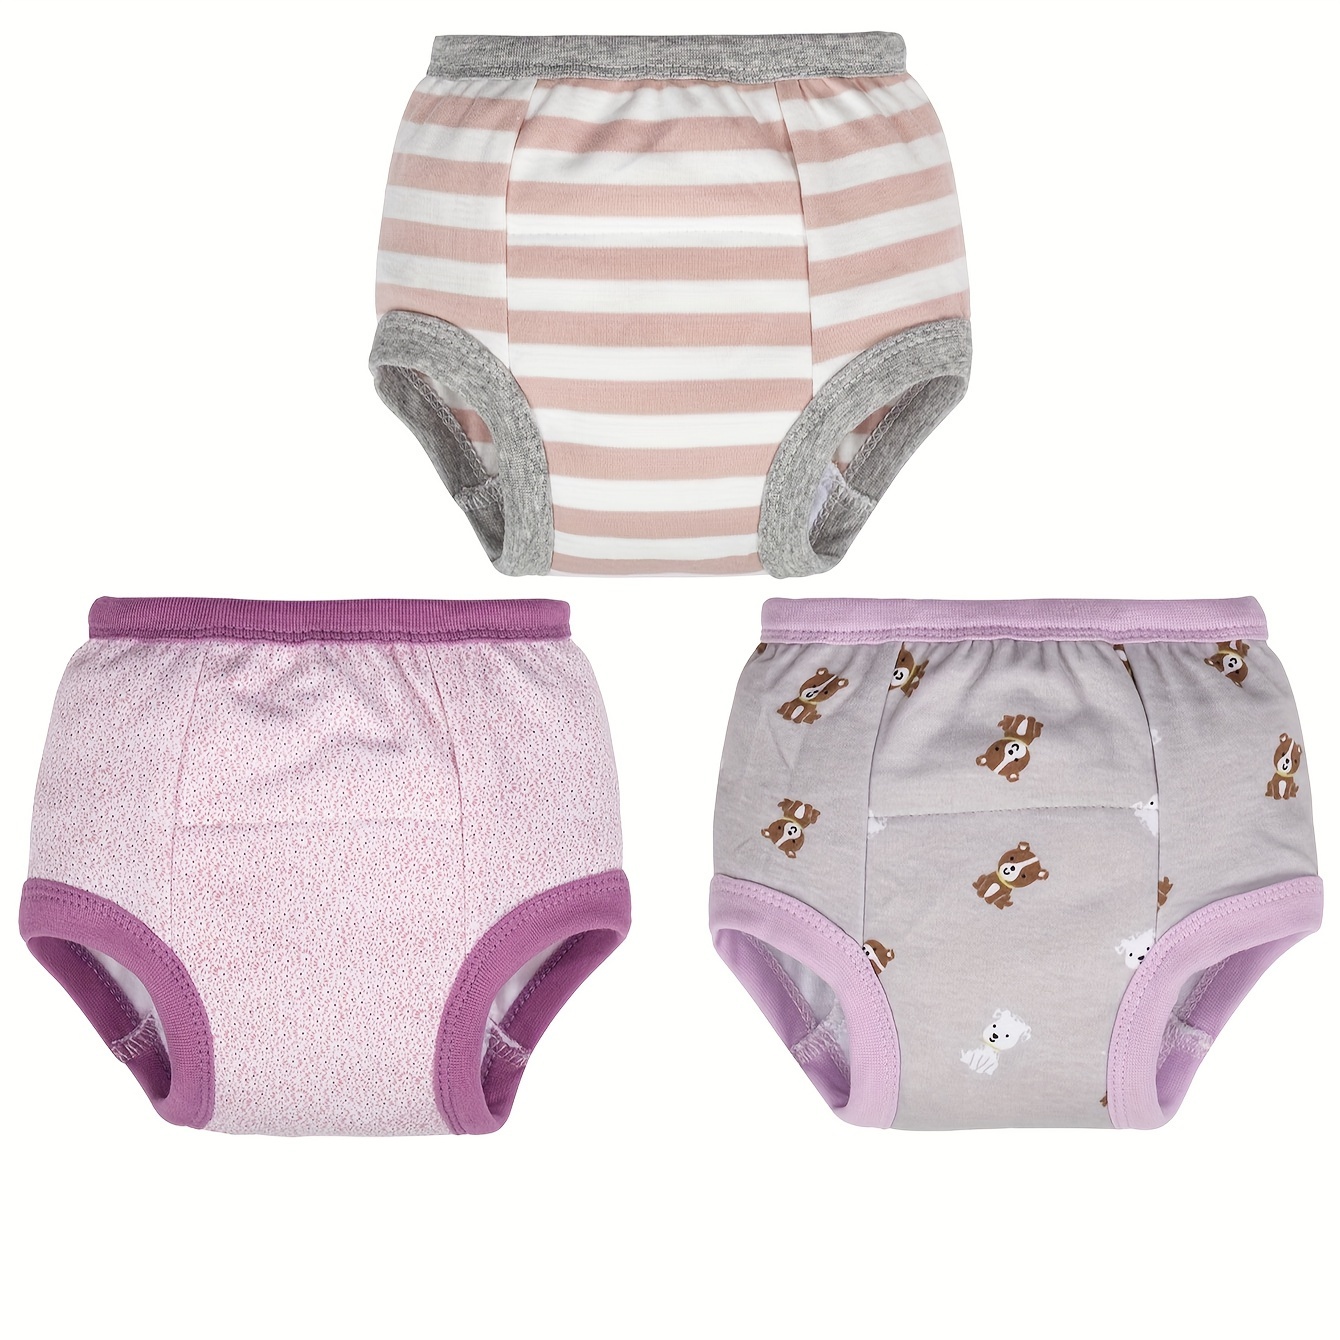 WELOVEBB 6 Layers Kids Reusable Washable Seluar Potty Training Pants Baby  Underwear Toilet Cloth Diaper Waterproof Pants